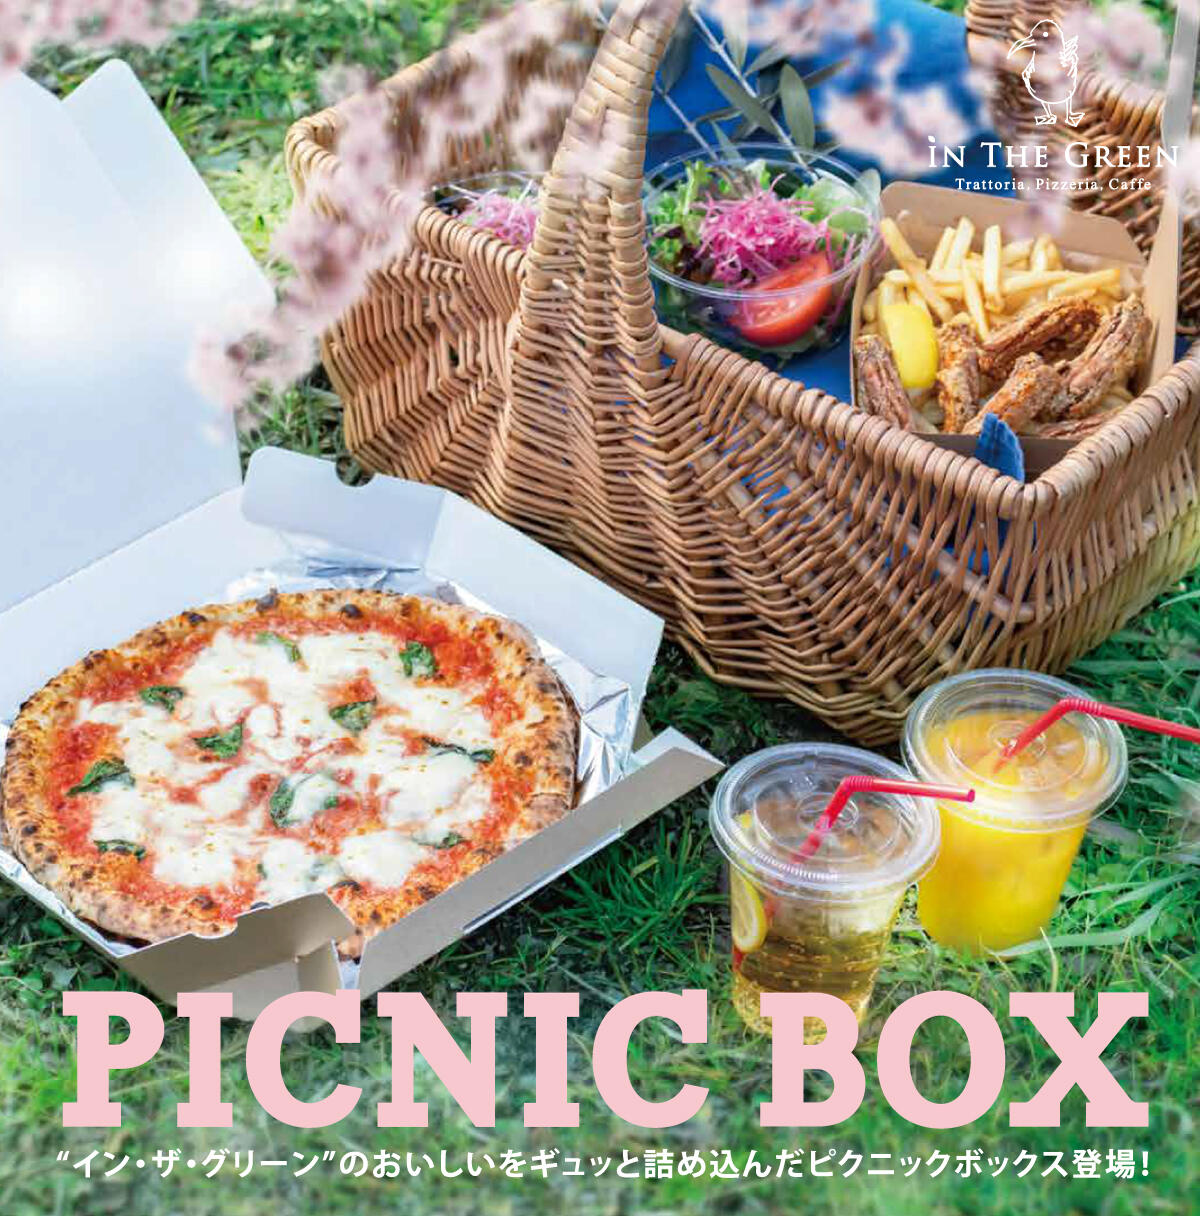 picnicbox01.jpg